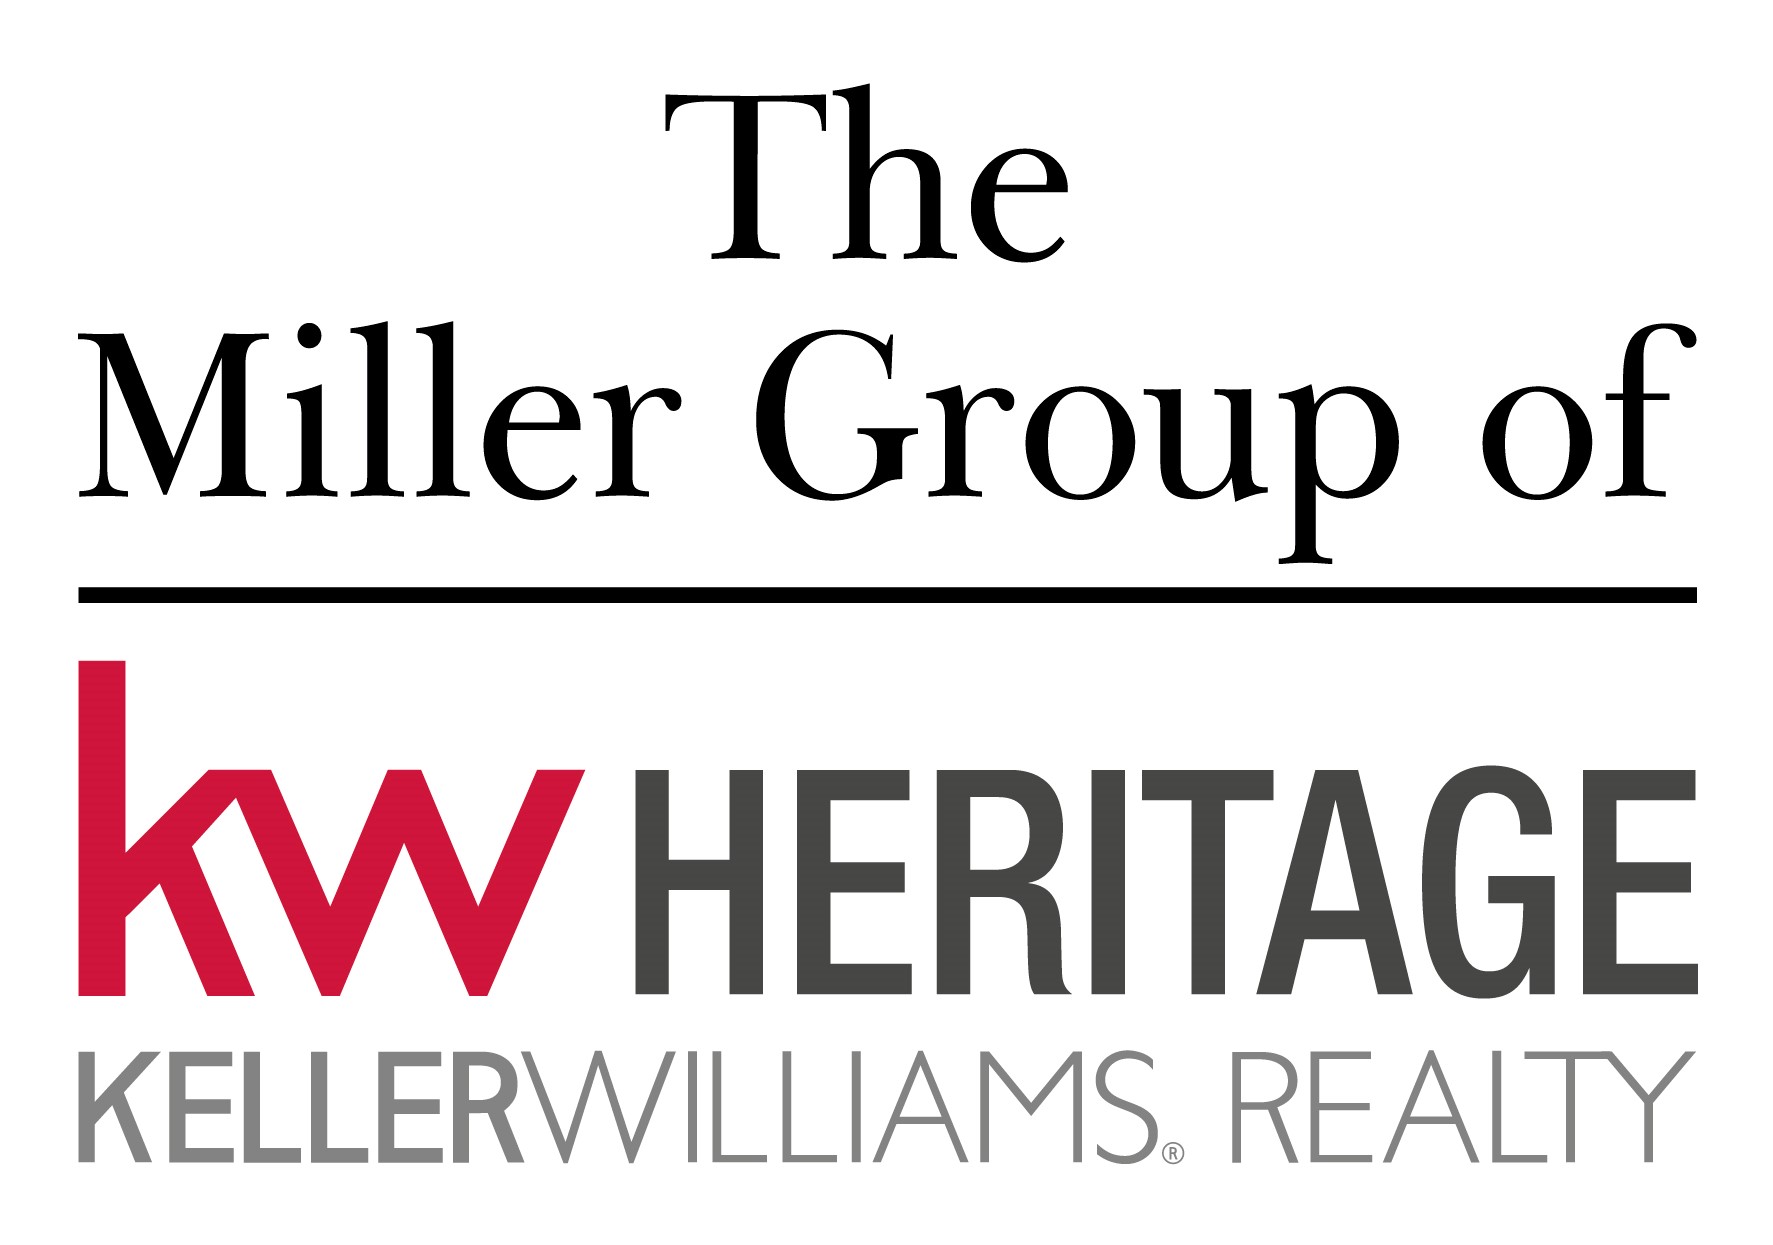 Miller Group of Keller Williams Realty